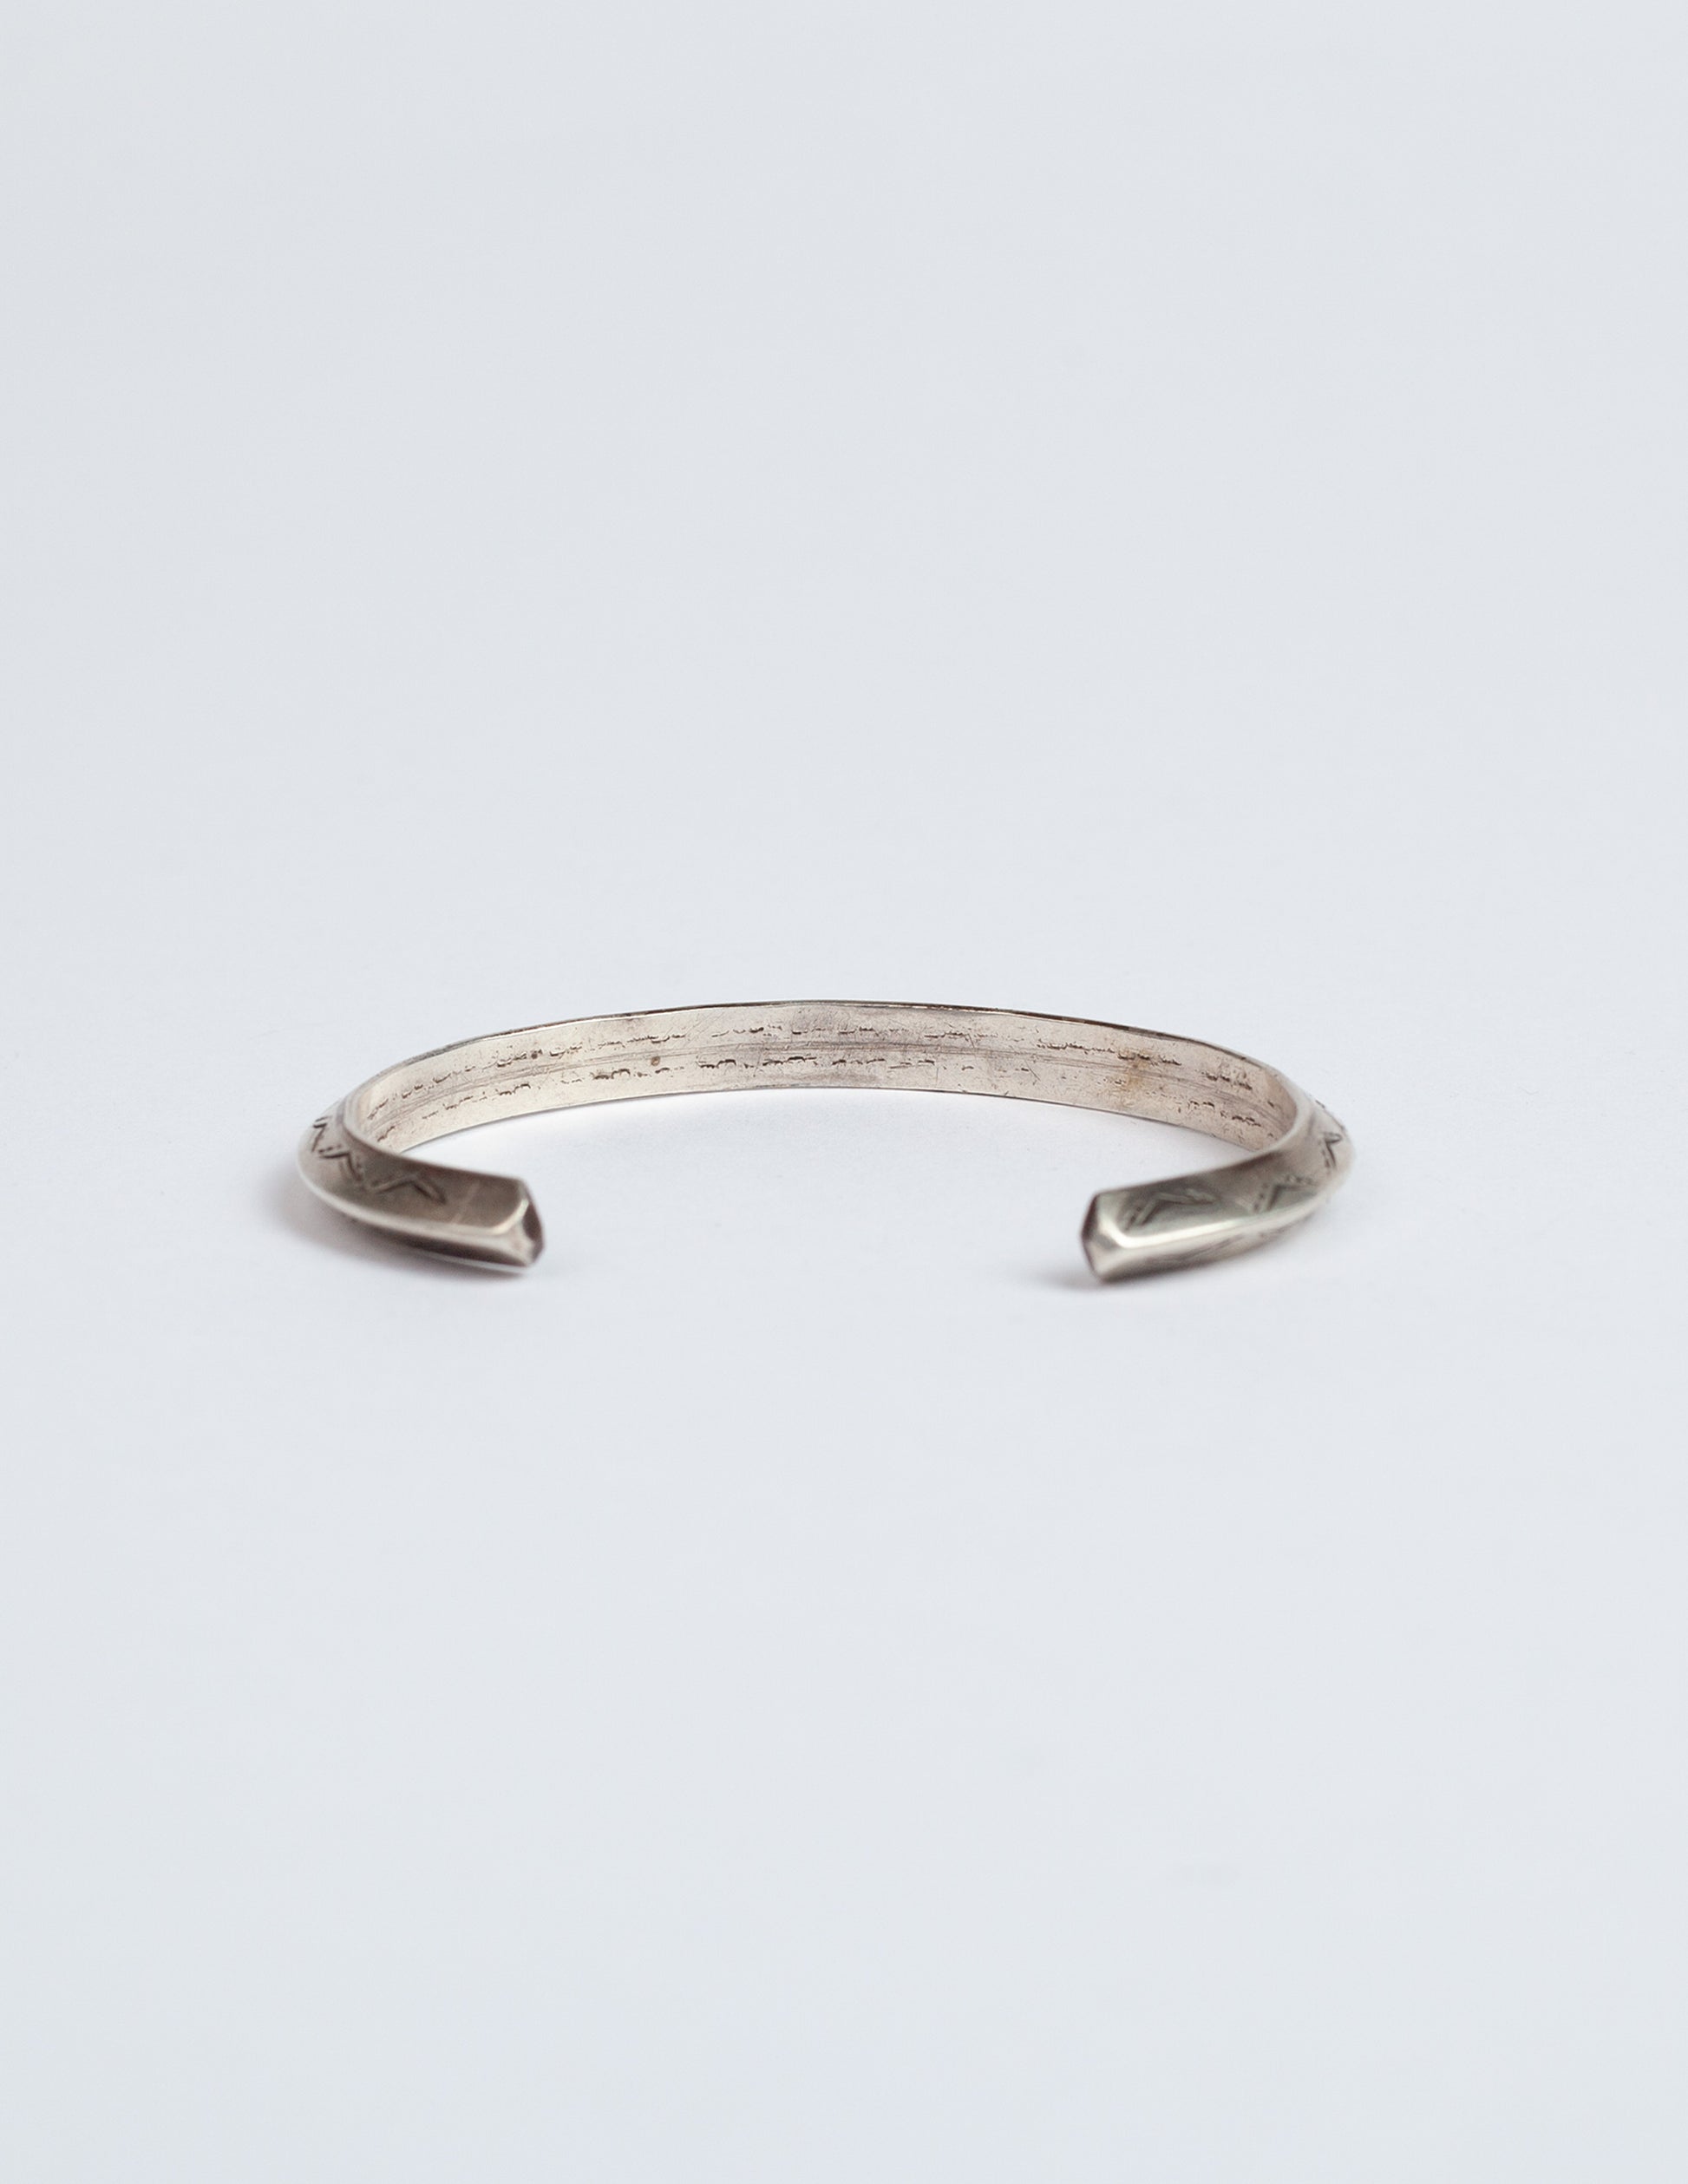 Vintage Carinated Navajo Sterling Silver Cuff Bracelet with Peak Design